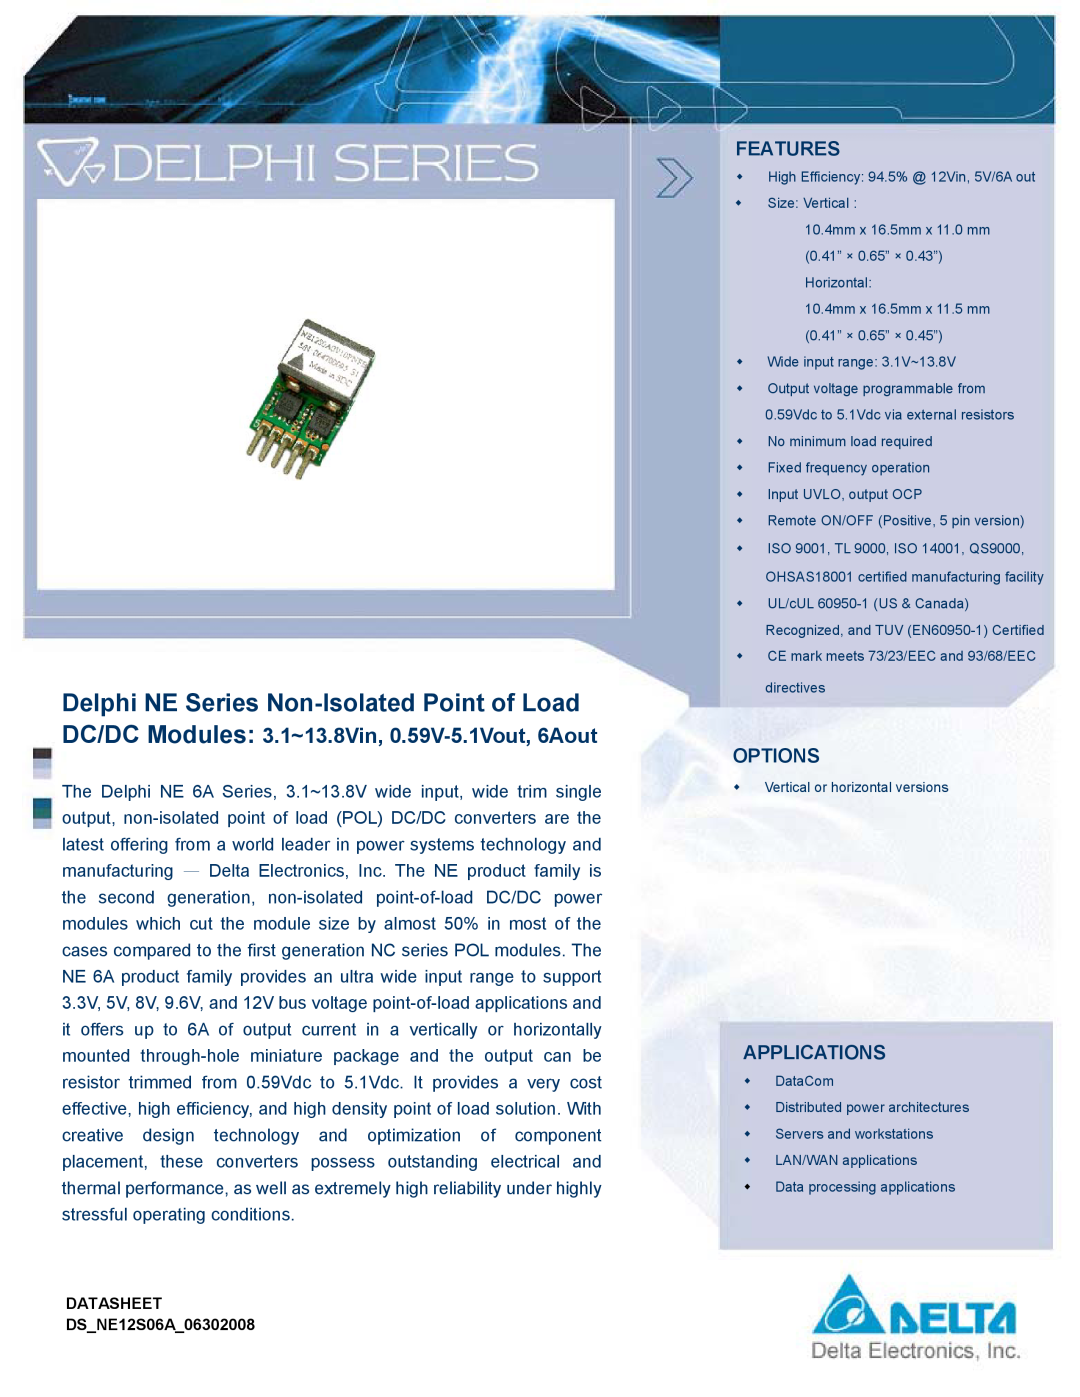 Delta Electronics 6A Series manual Features, Options, Applications, DATASHEET DSNE12S06A06302008 